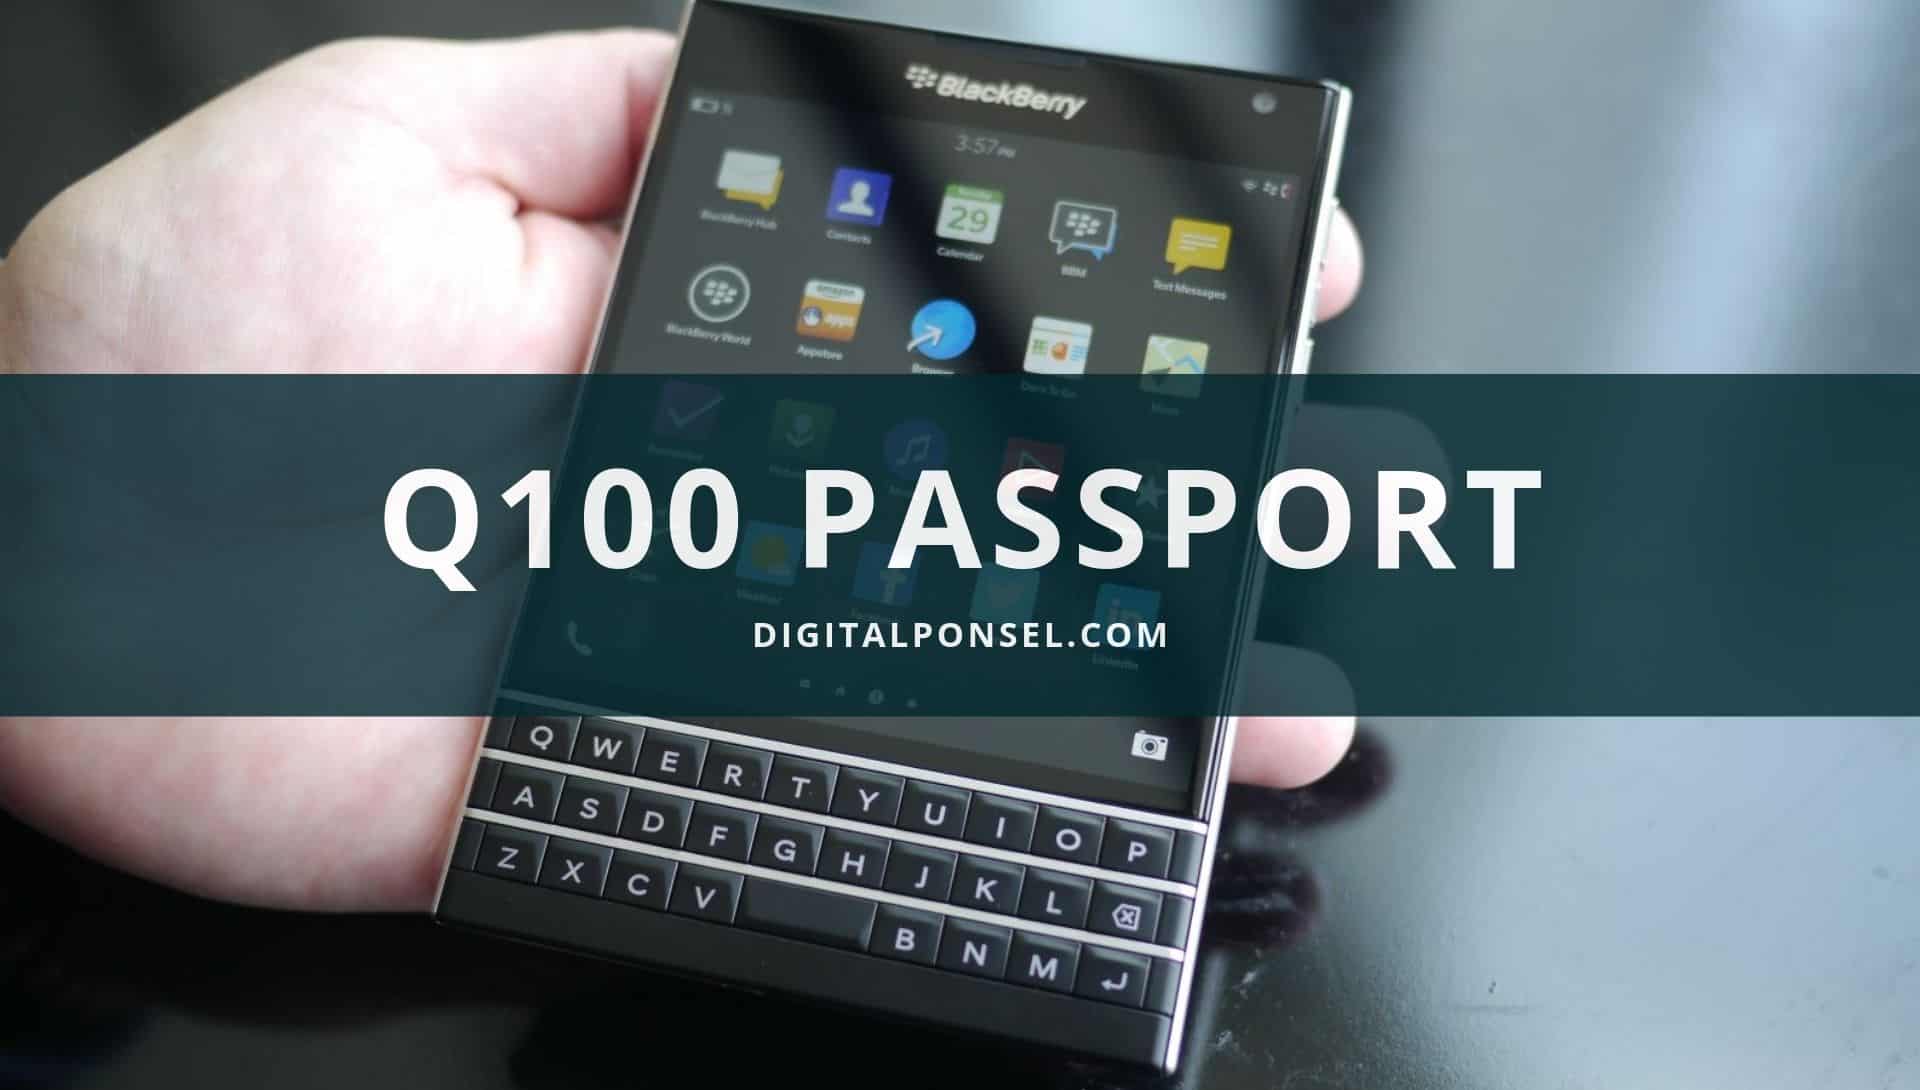 Blackberry Q100 Passport